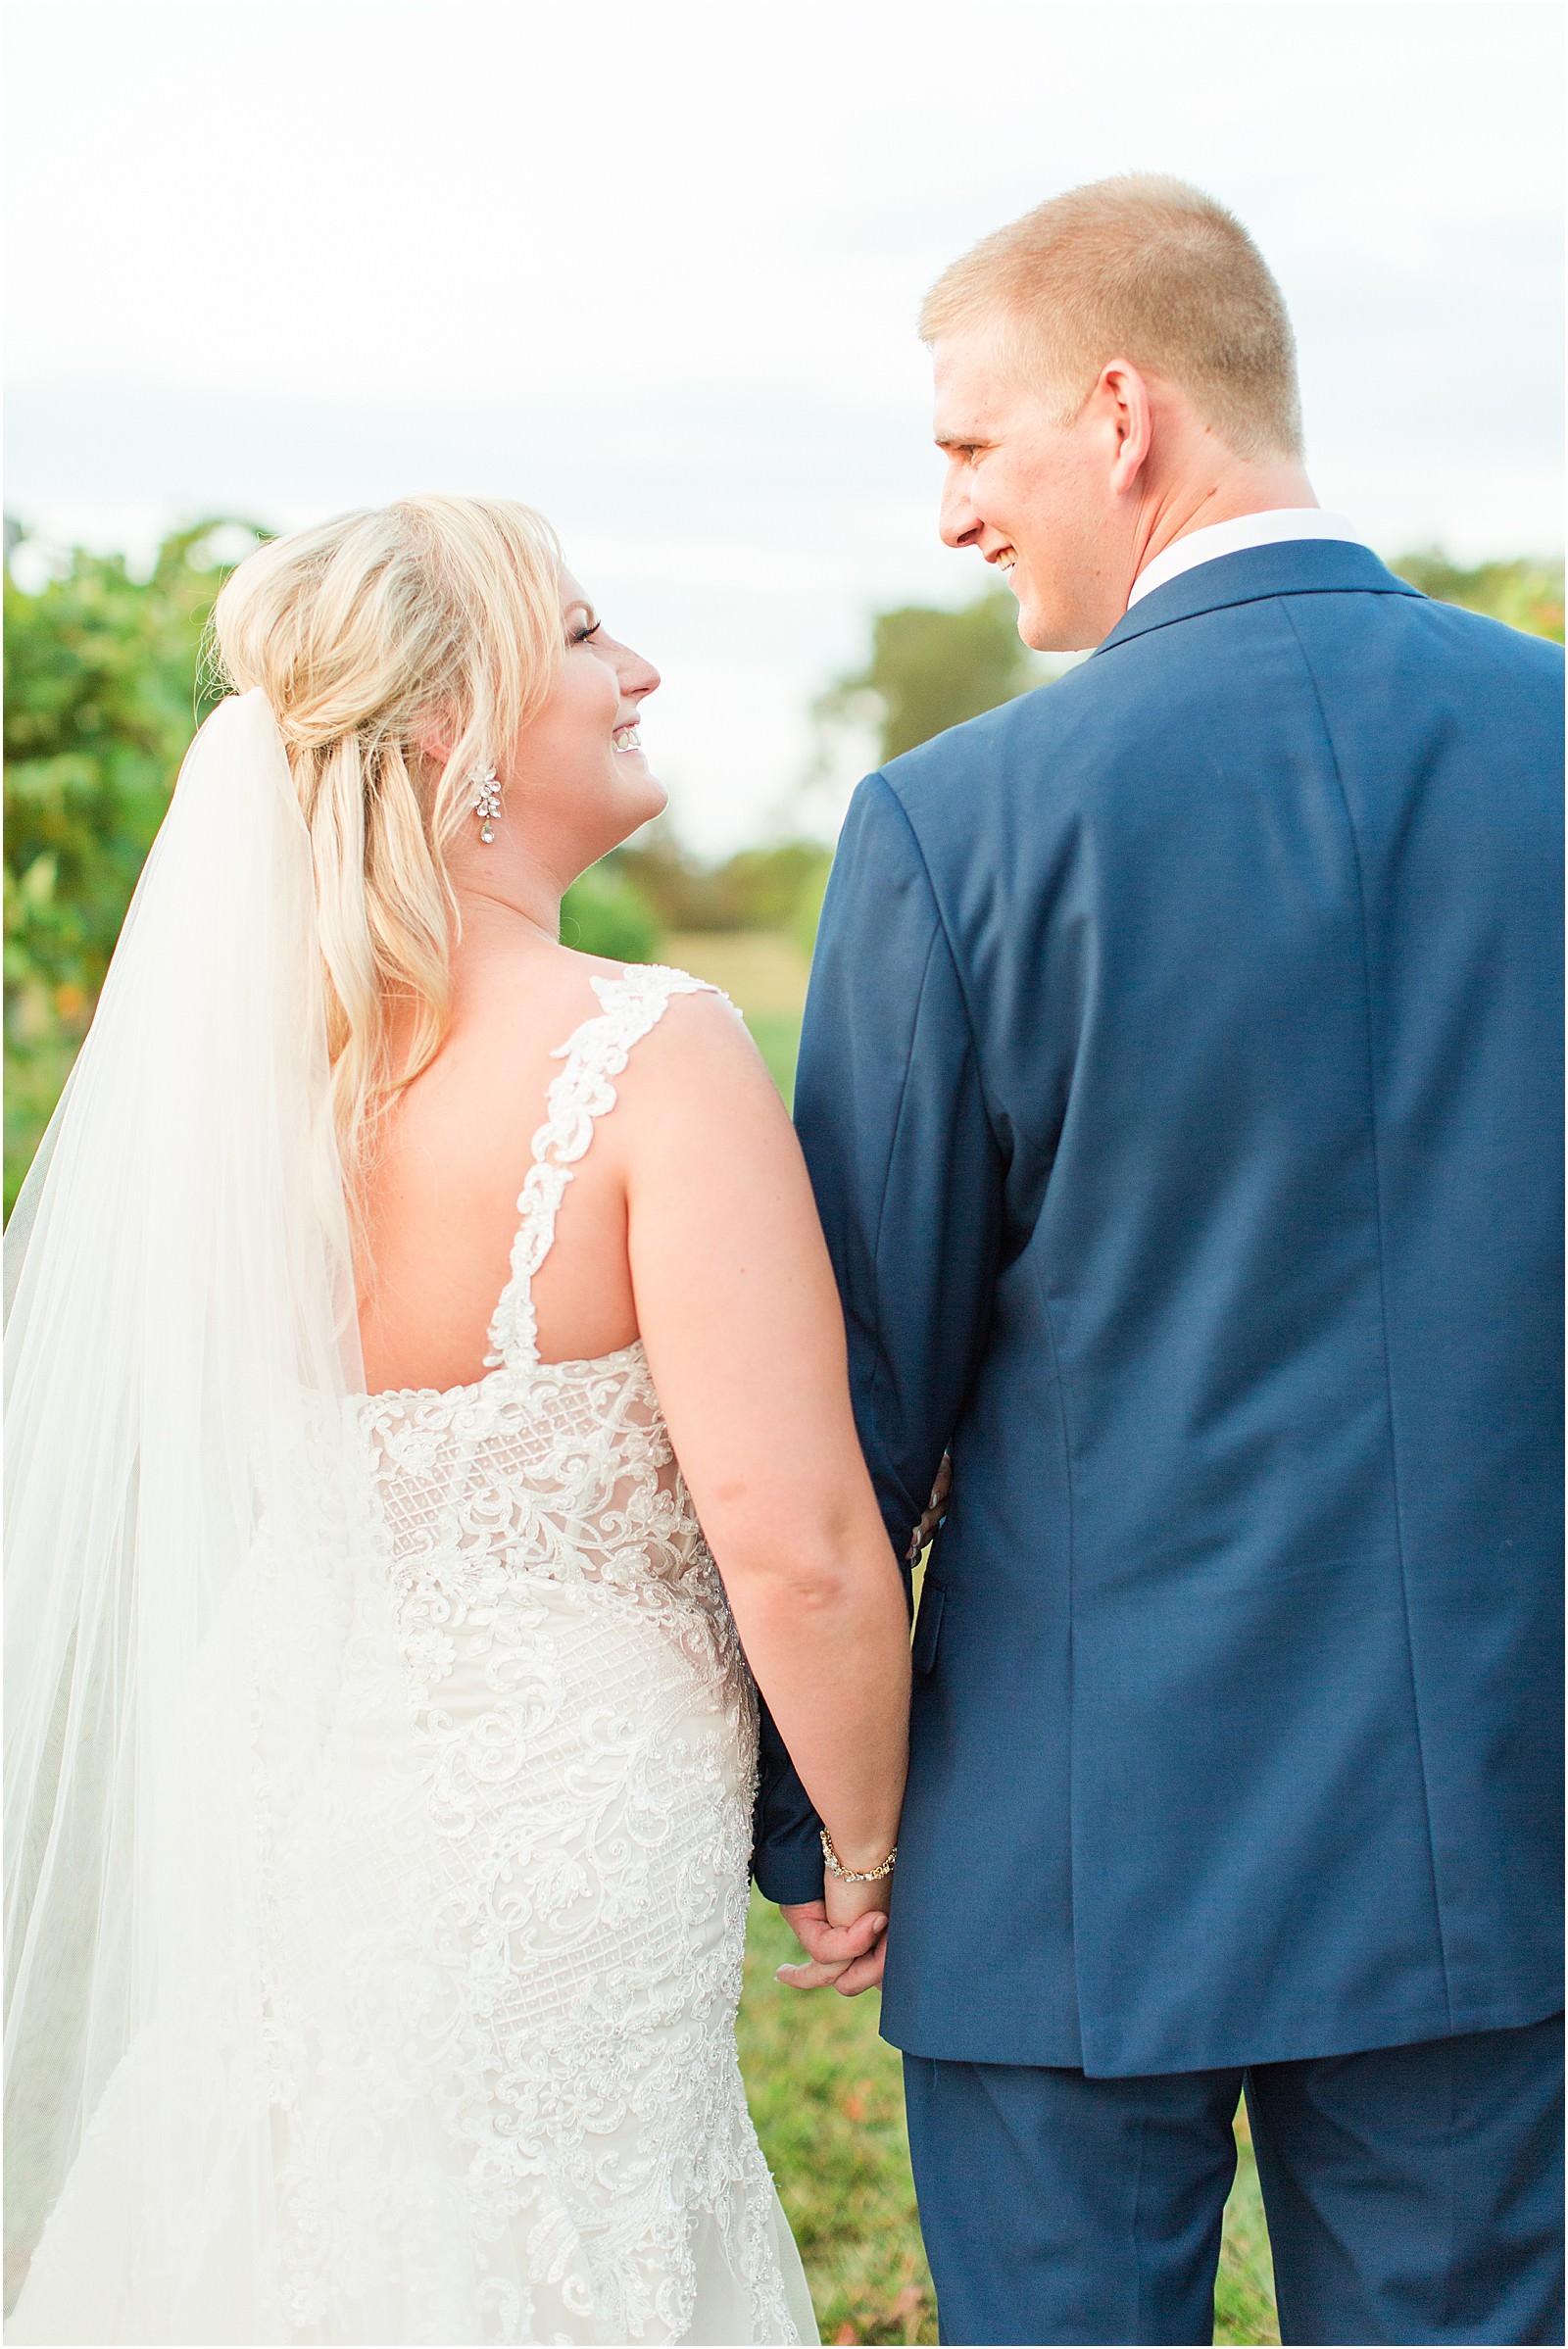 Kelsey and Caleb | Walkers Bluff Winery Wedding | Bret and Brandie Photography097.jpg